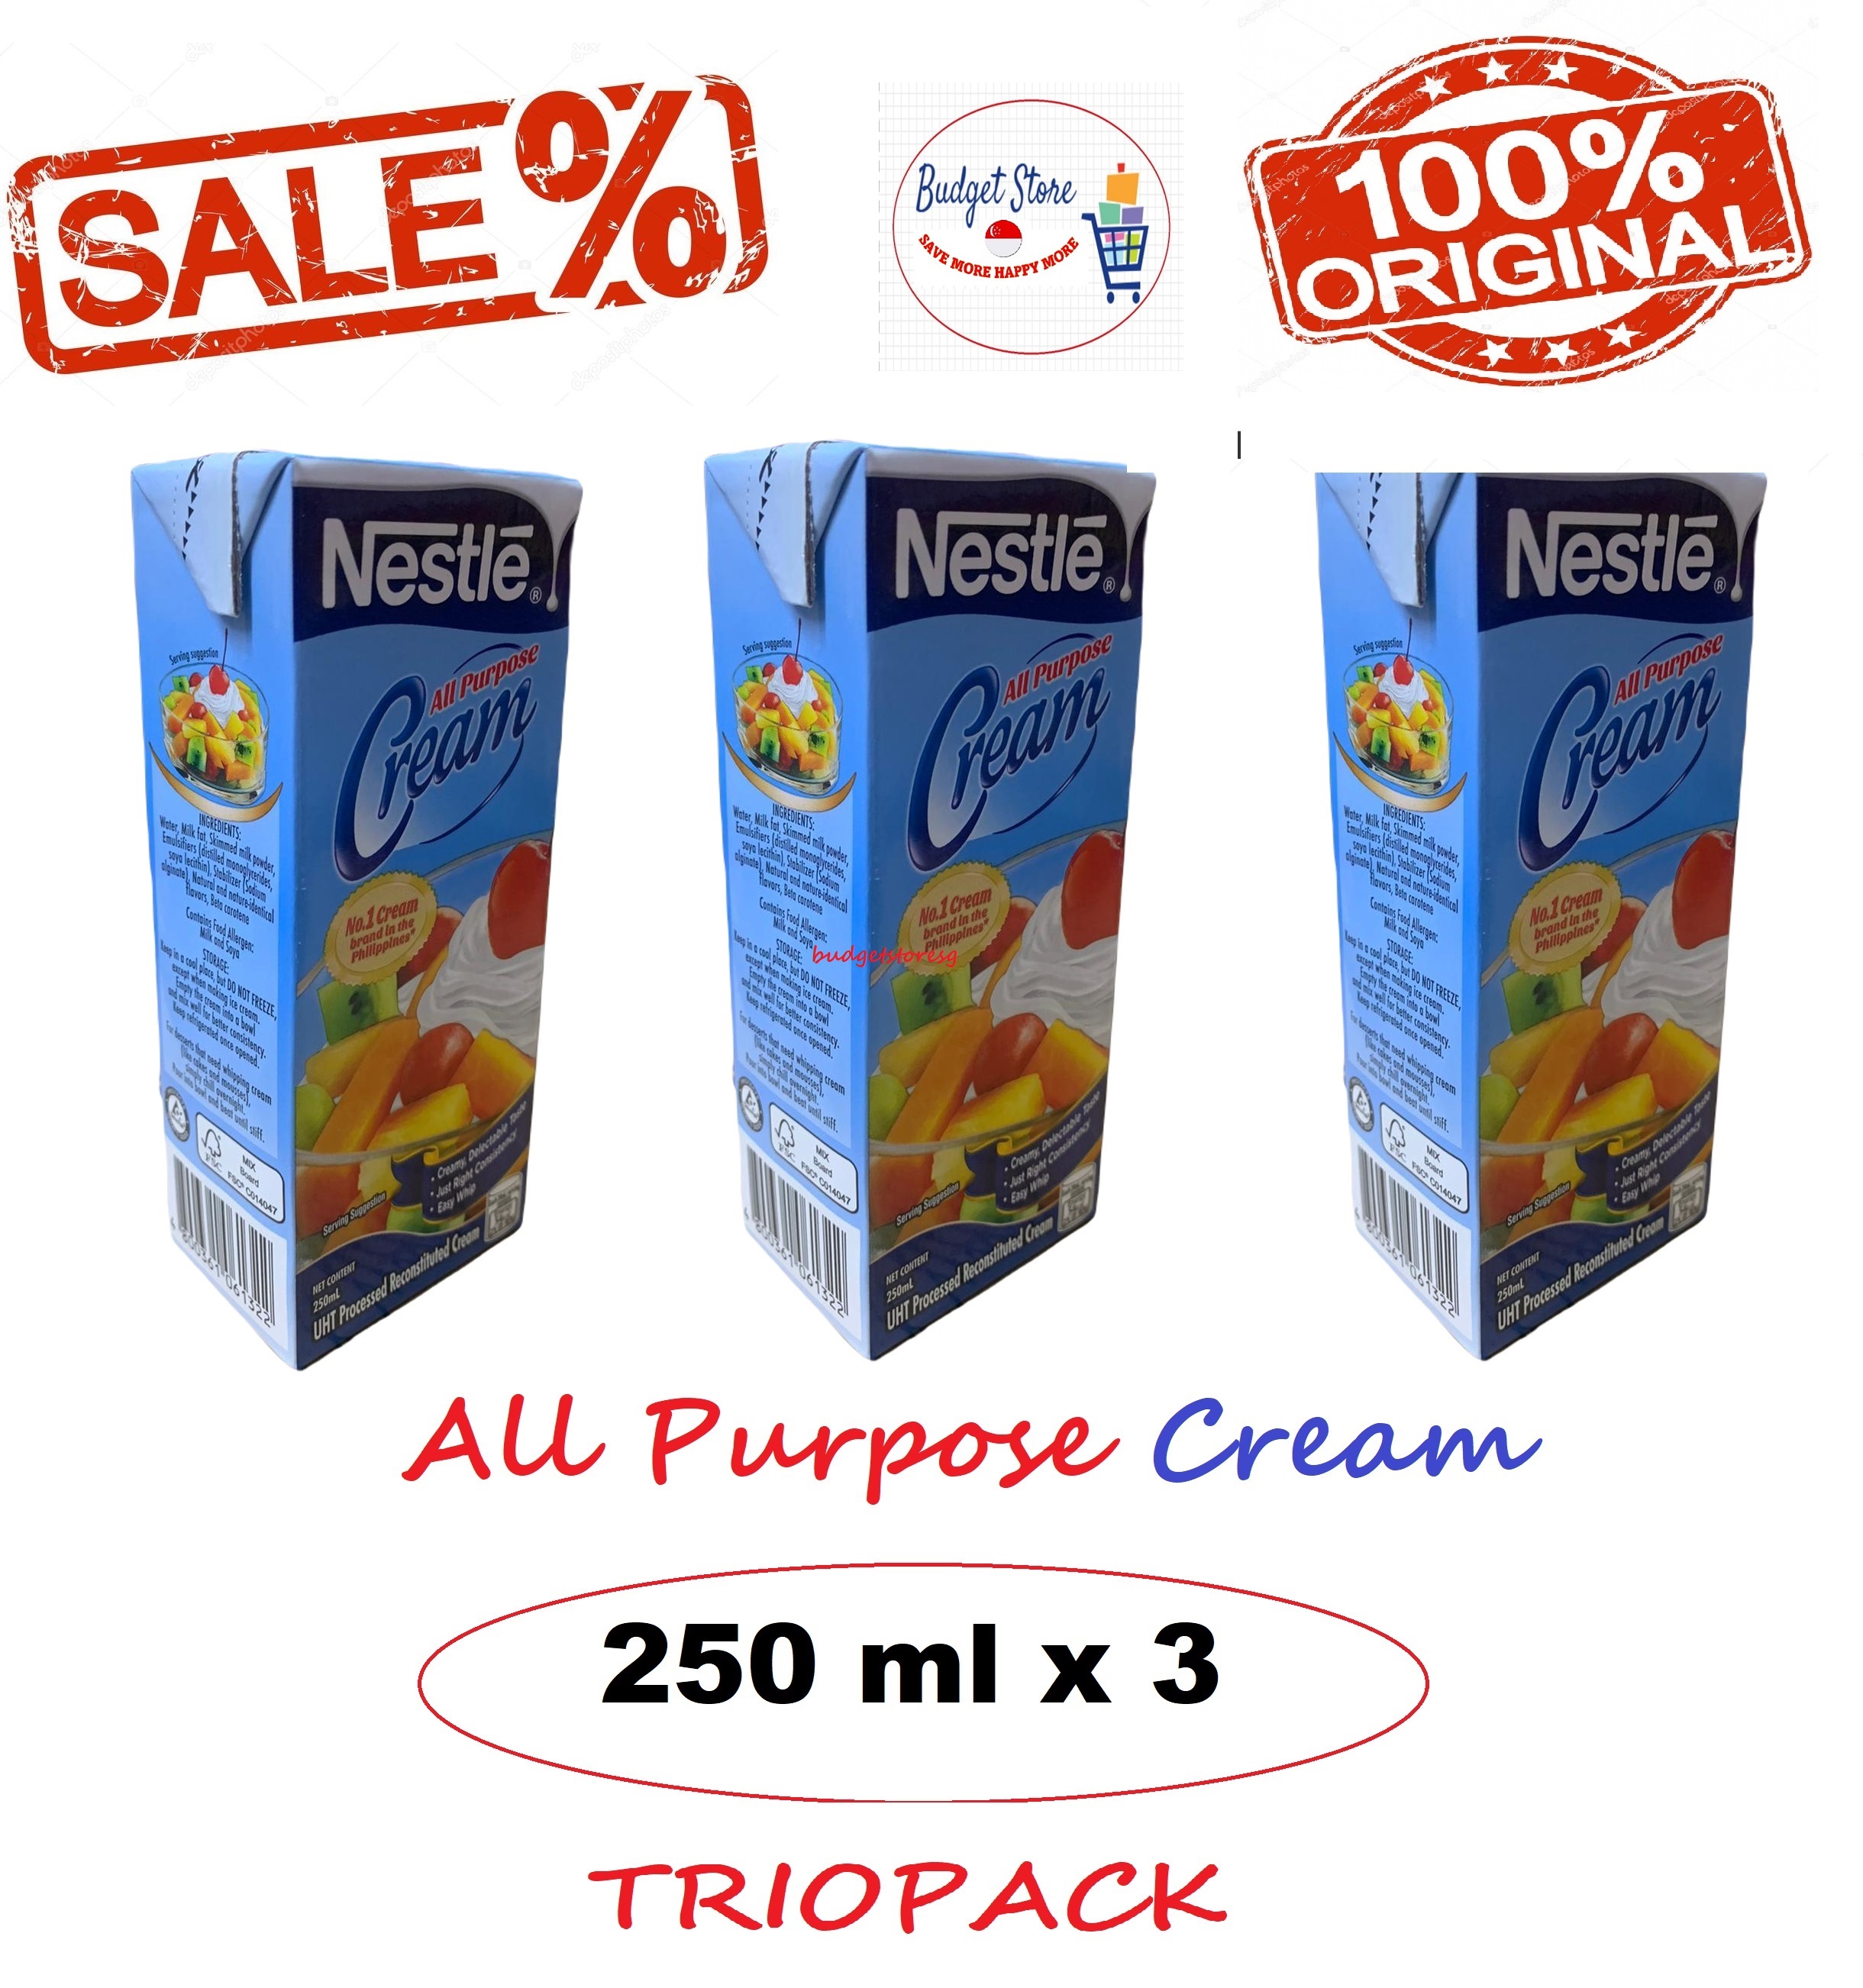 NESTLÉ® All-Purpose Cream 250ml